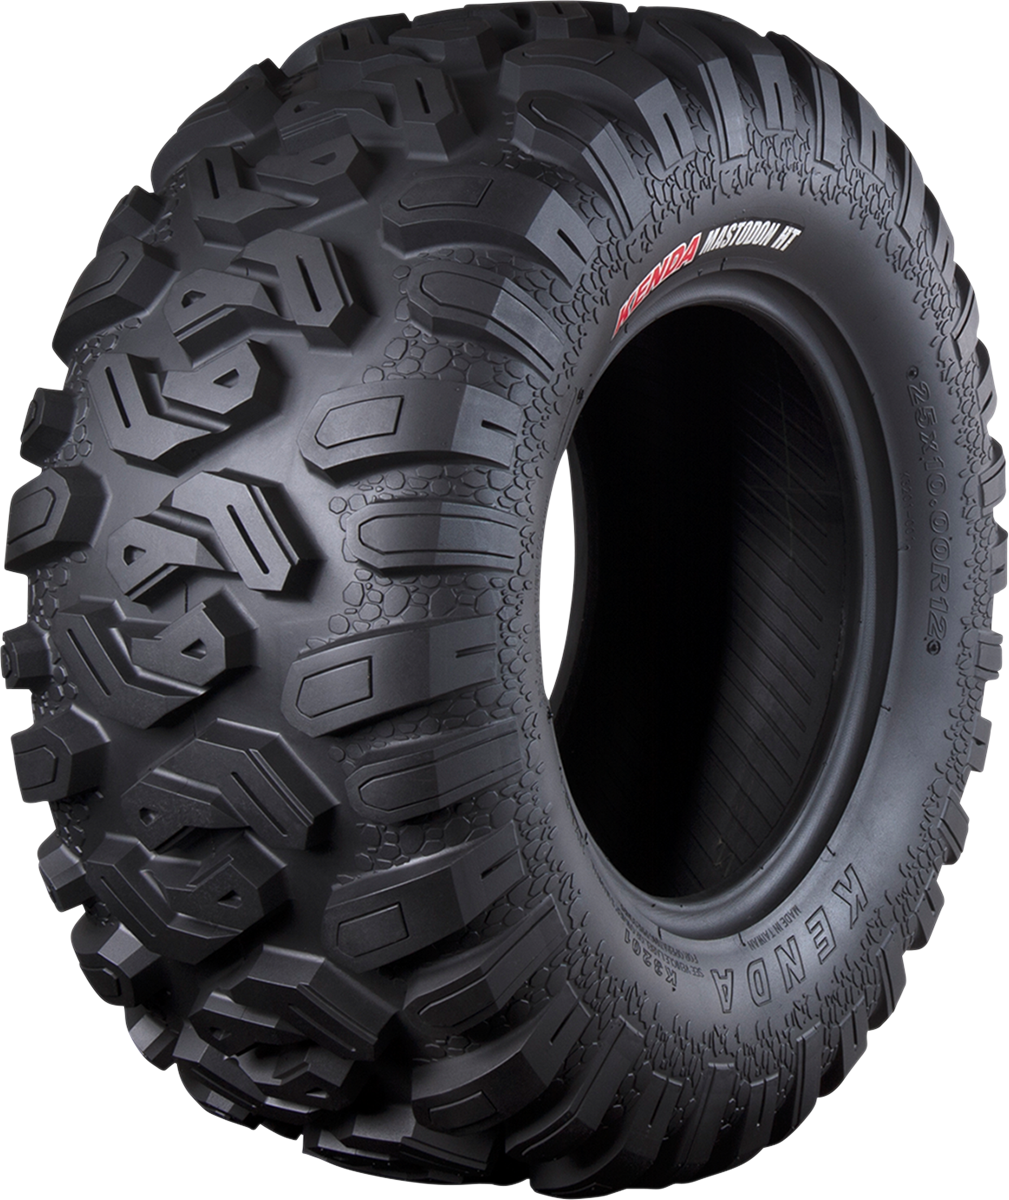 Tire - K3201 - Mastodon HT - 25x8R12